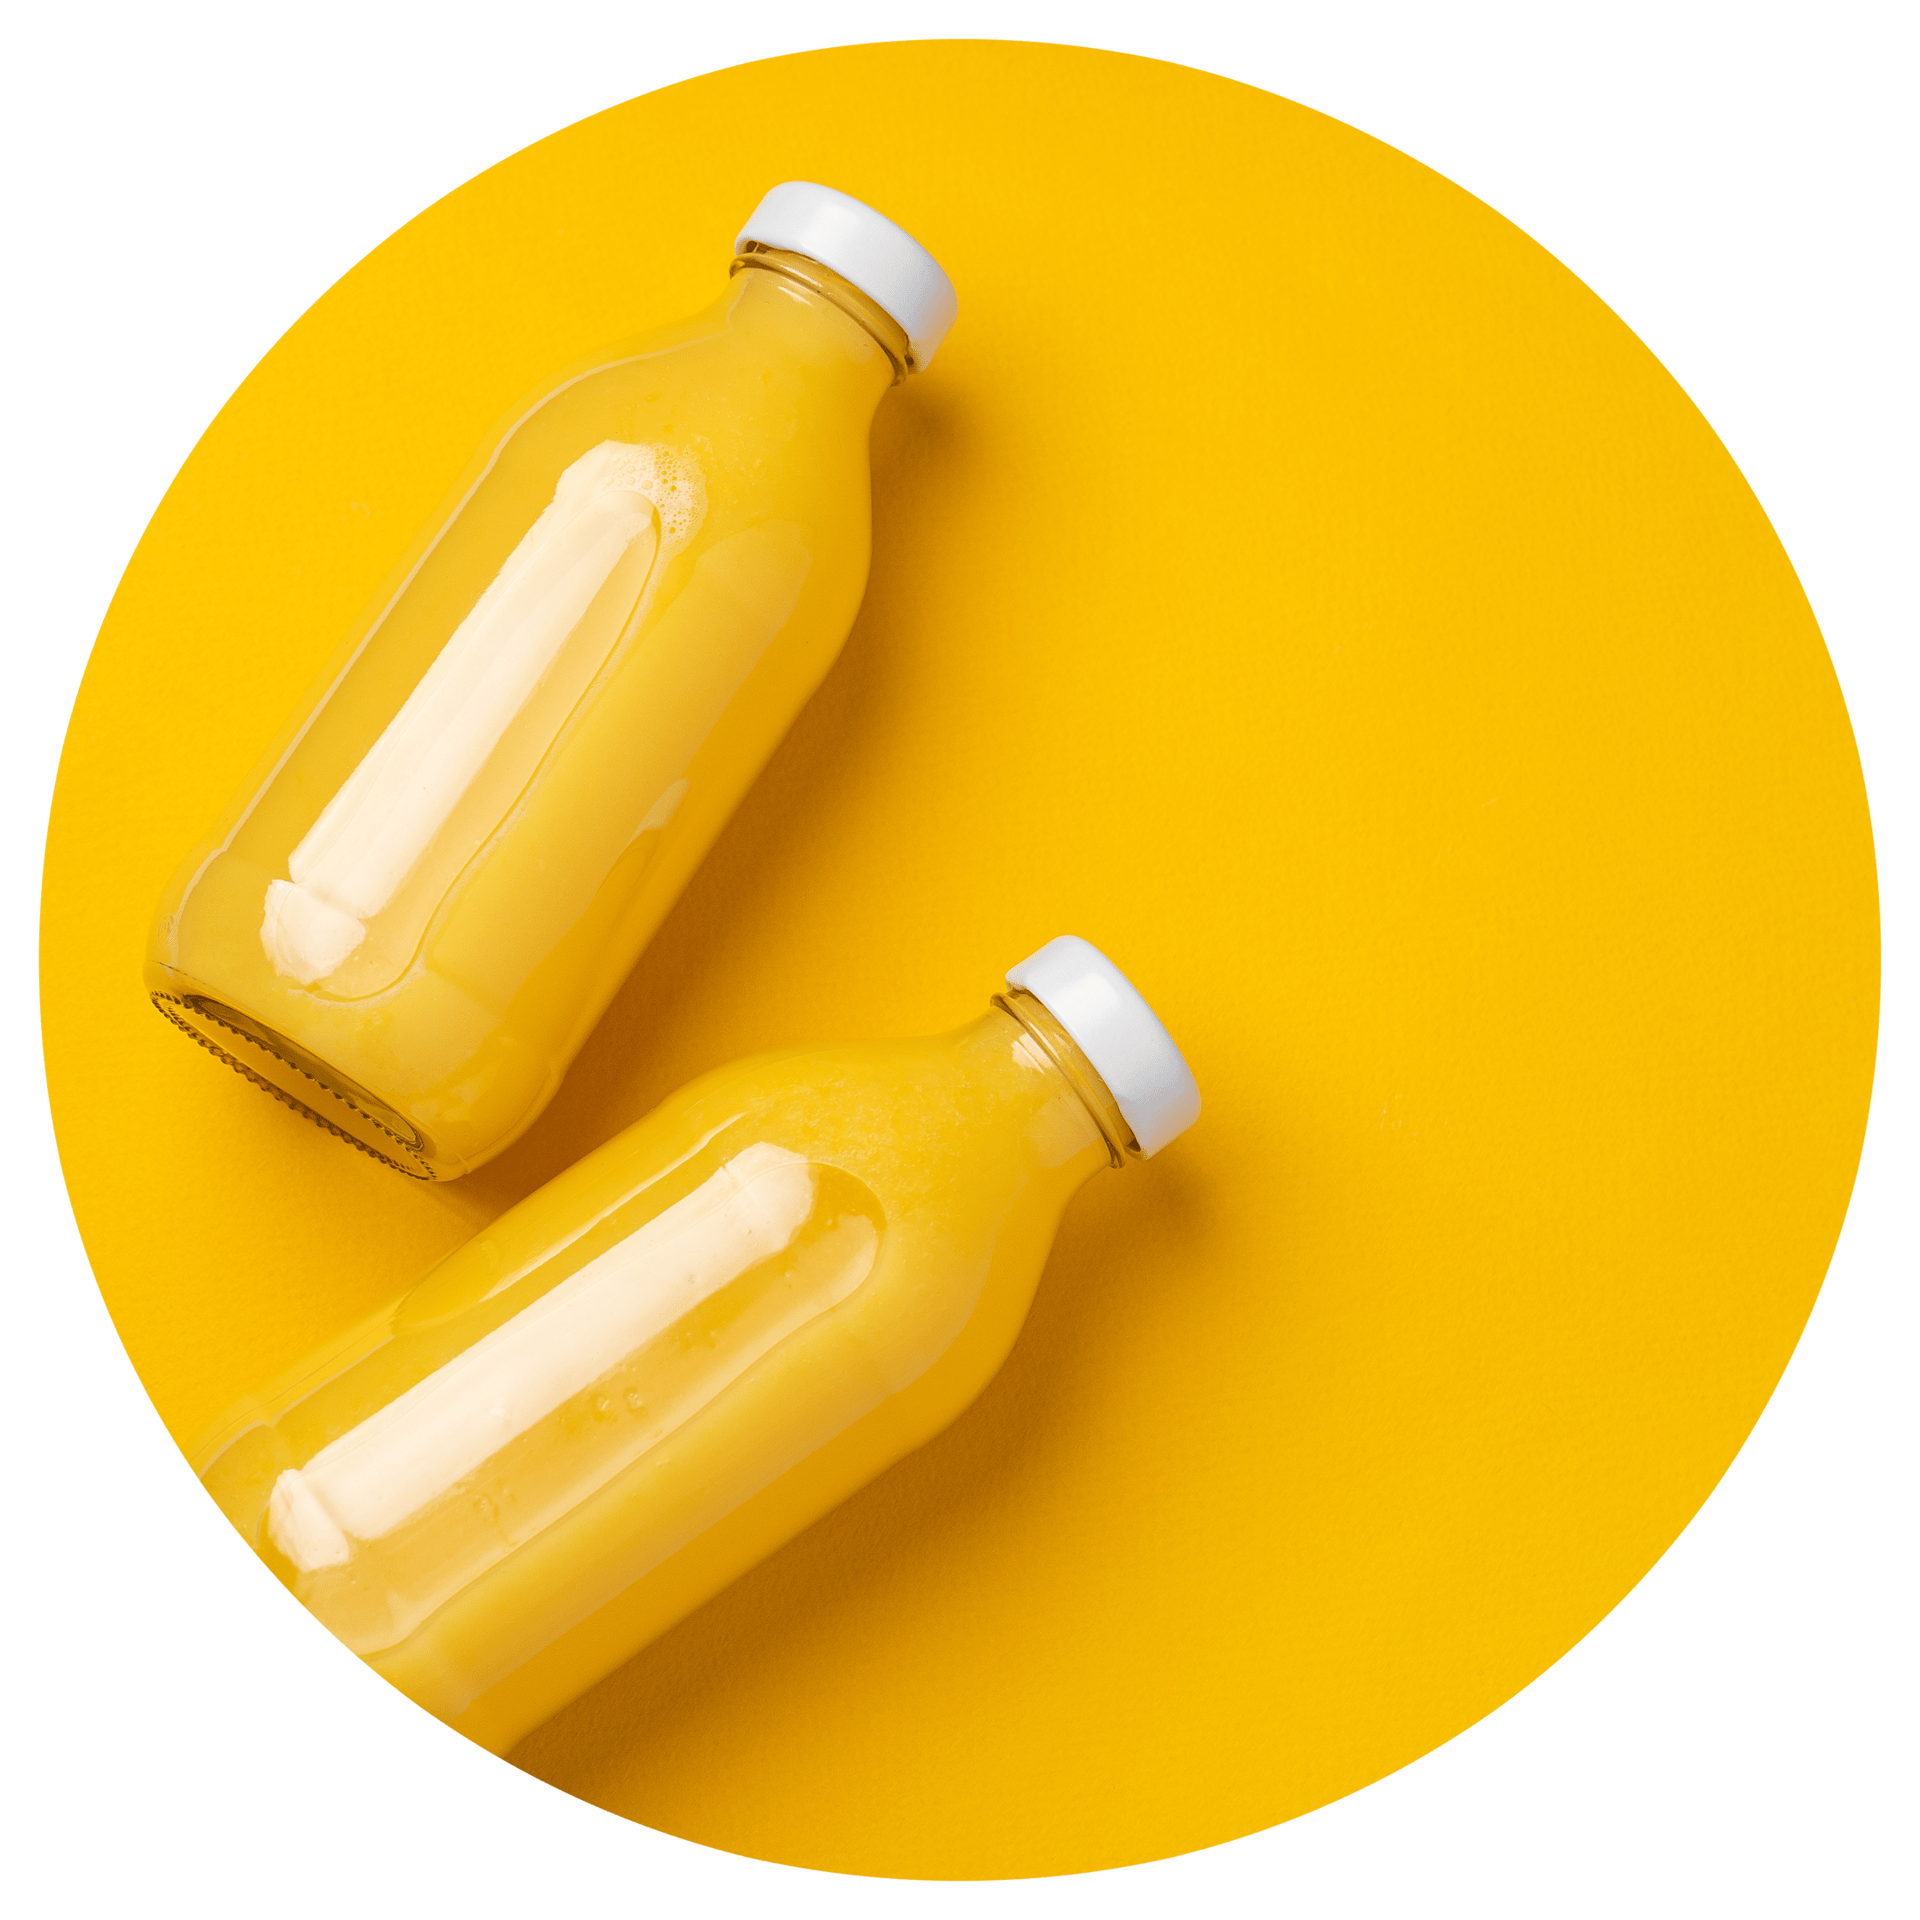 Two bottles of orange juice